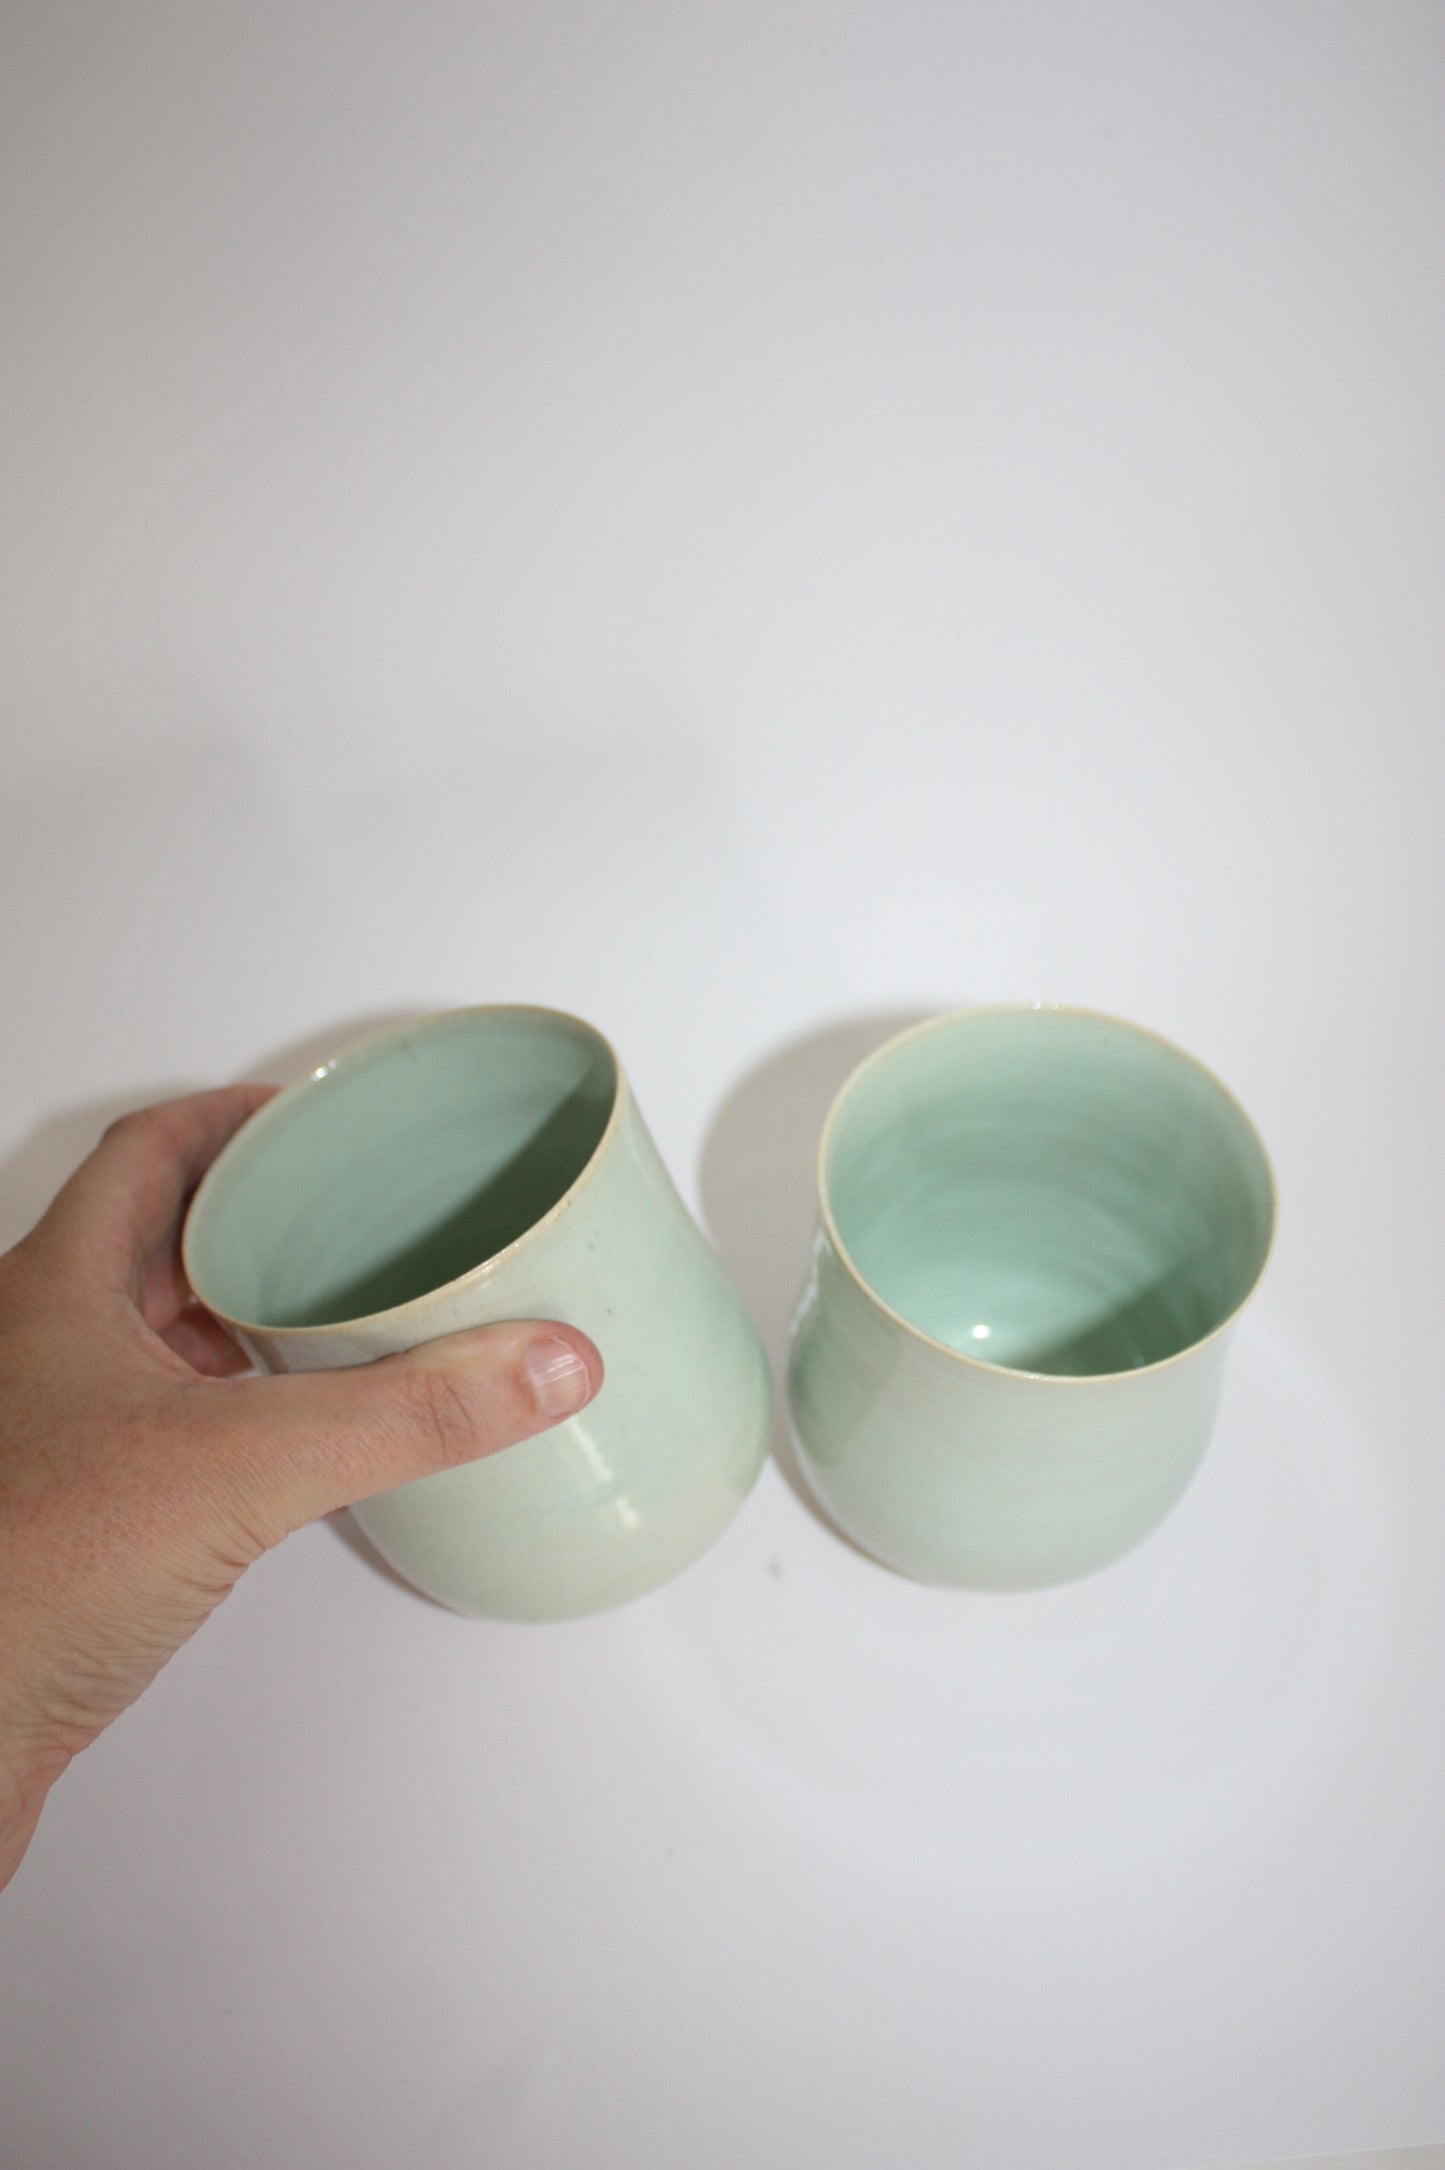 Medium cup, Lagon Vert